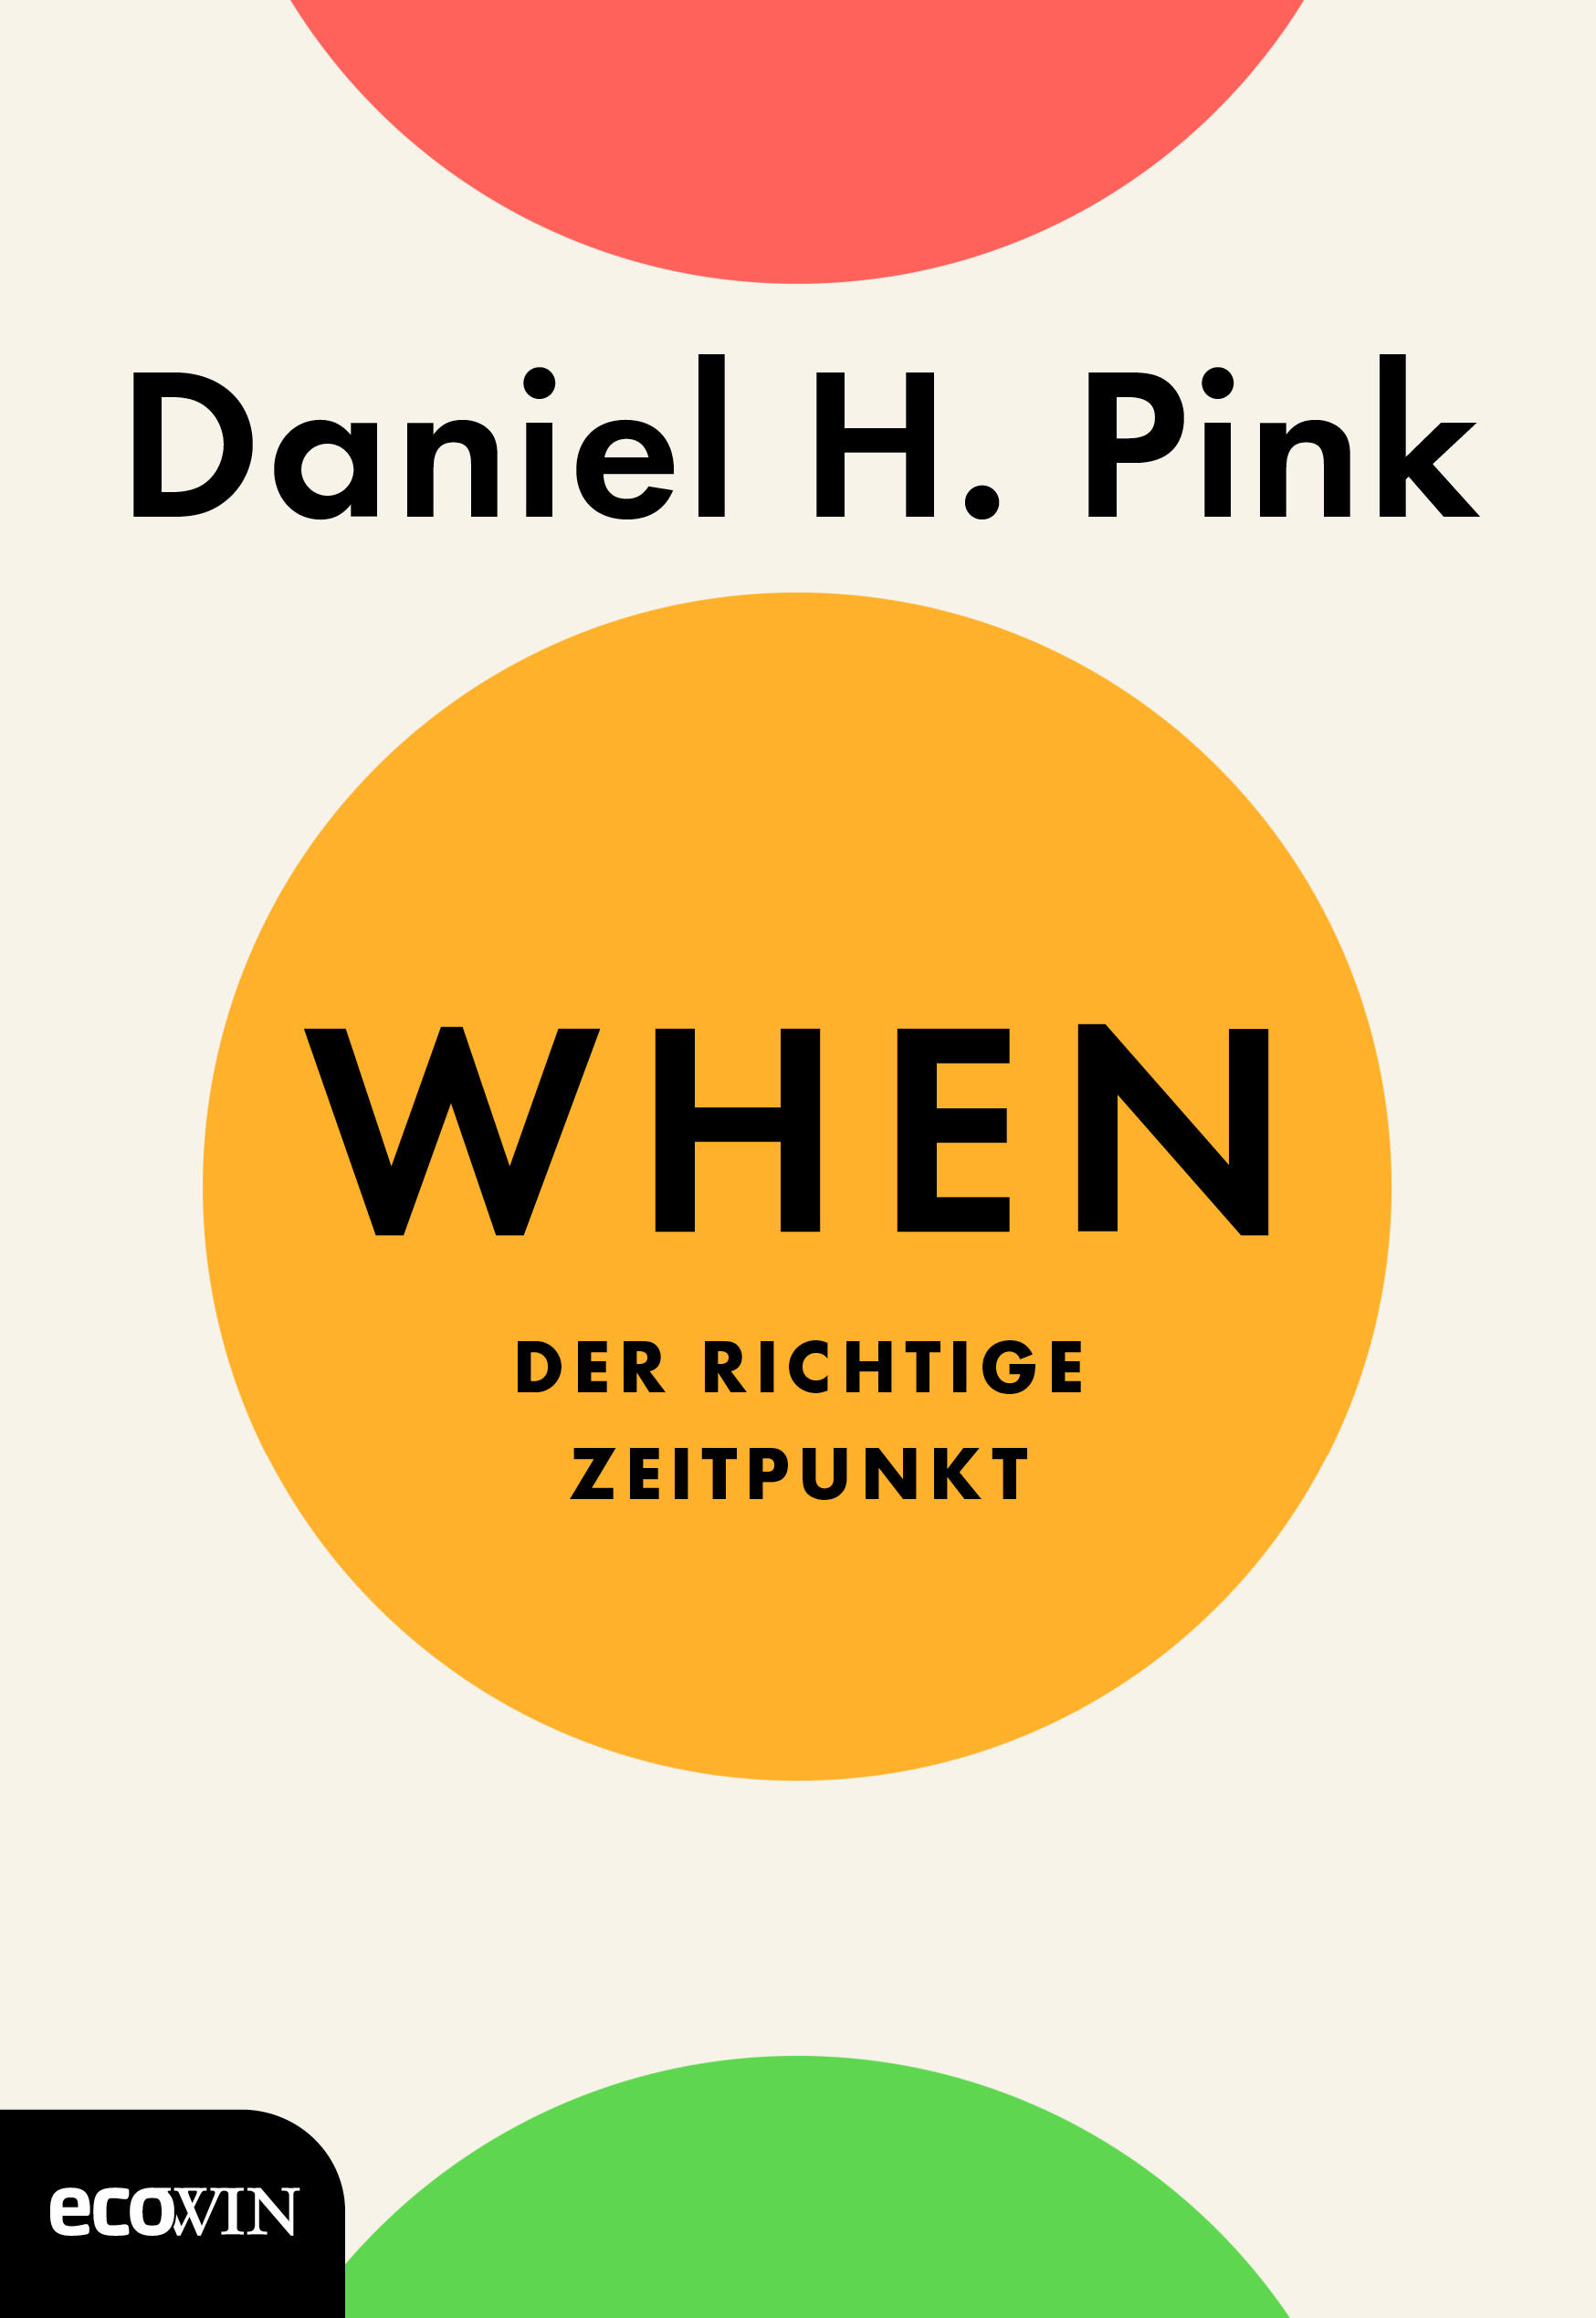 Daniel H. Pink: When